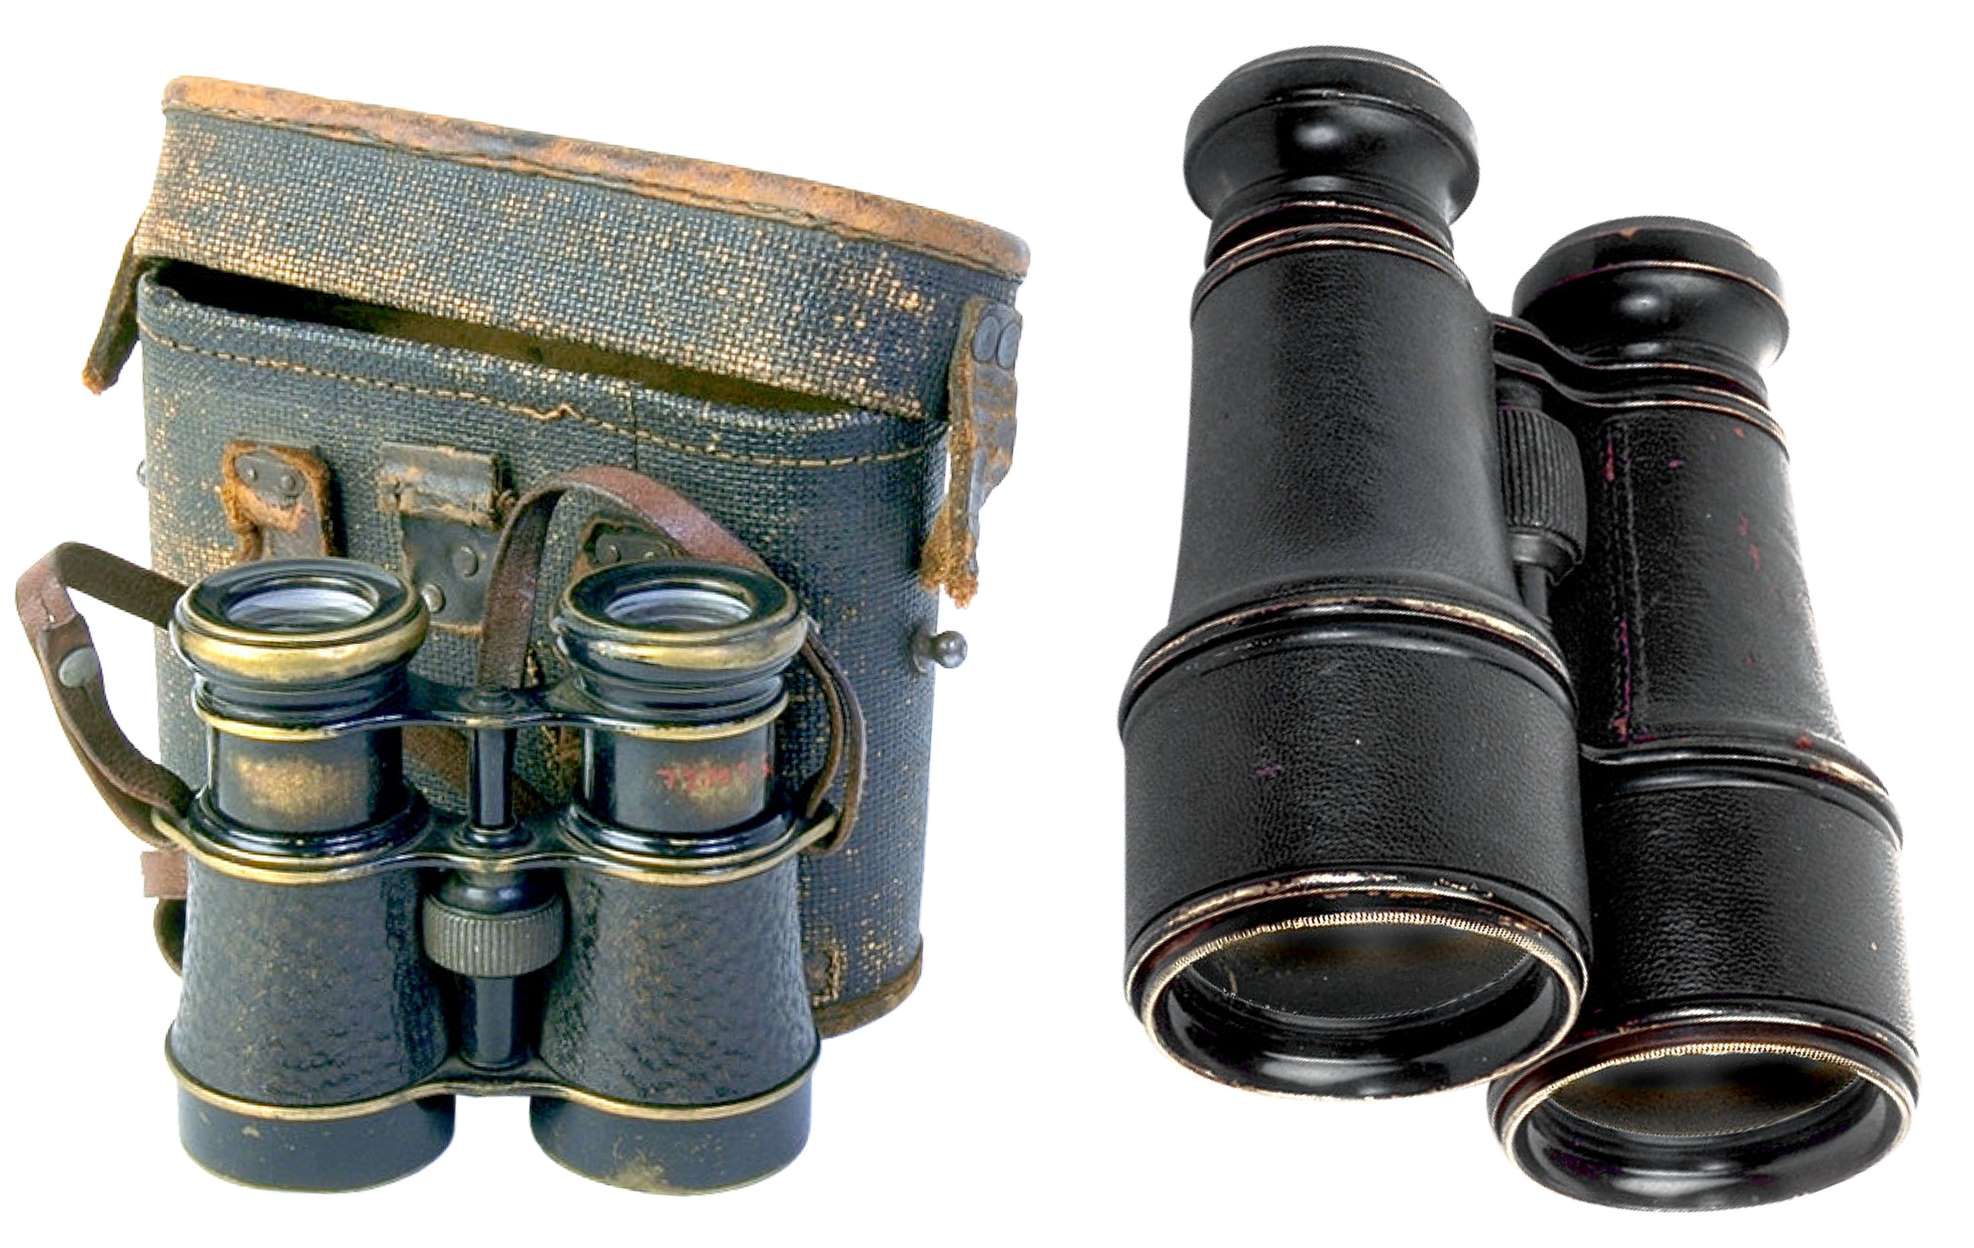 appliance #binoculars #exploration #field #increase #military #old ...